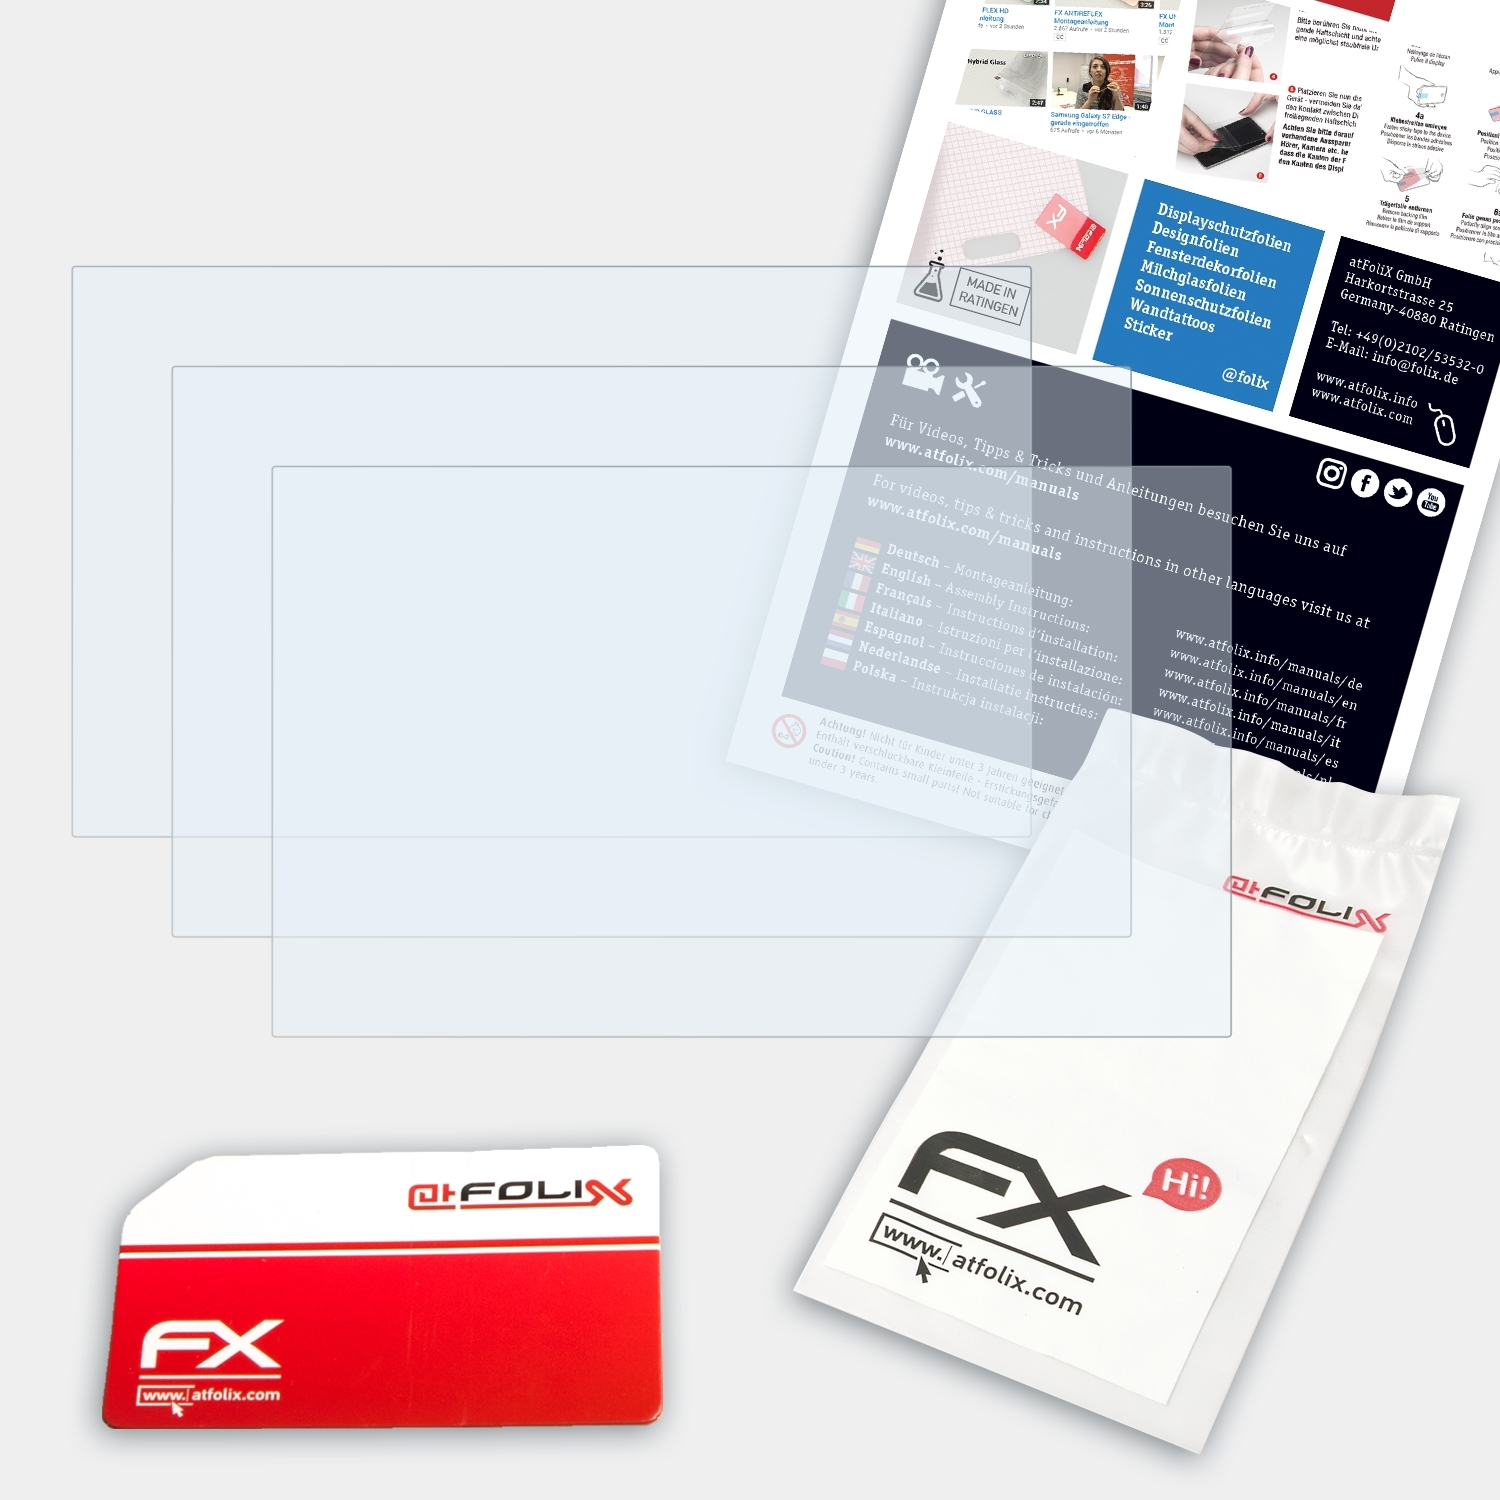 FX-Clear X800D-U) Alpine 3x ATFOLIX Displayschutz(für